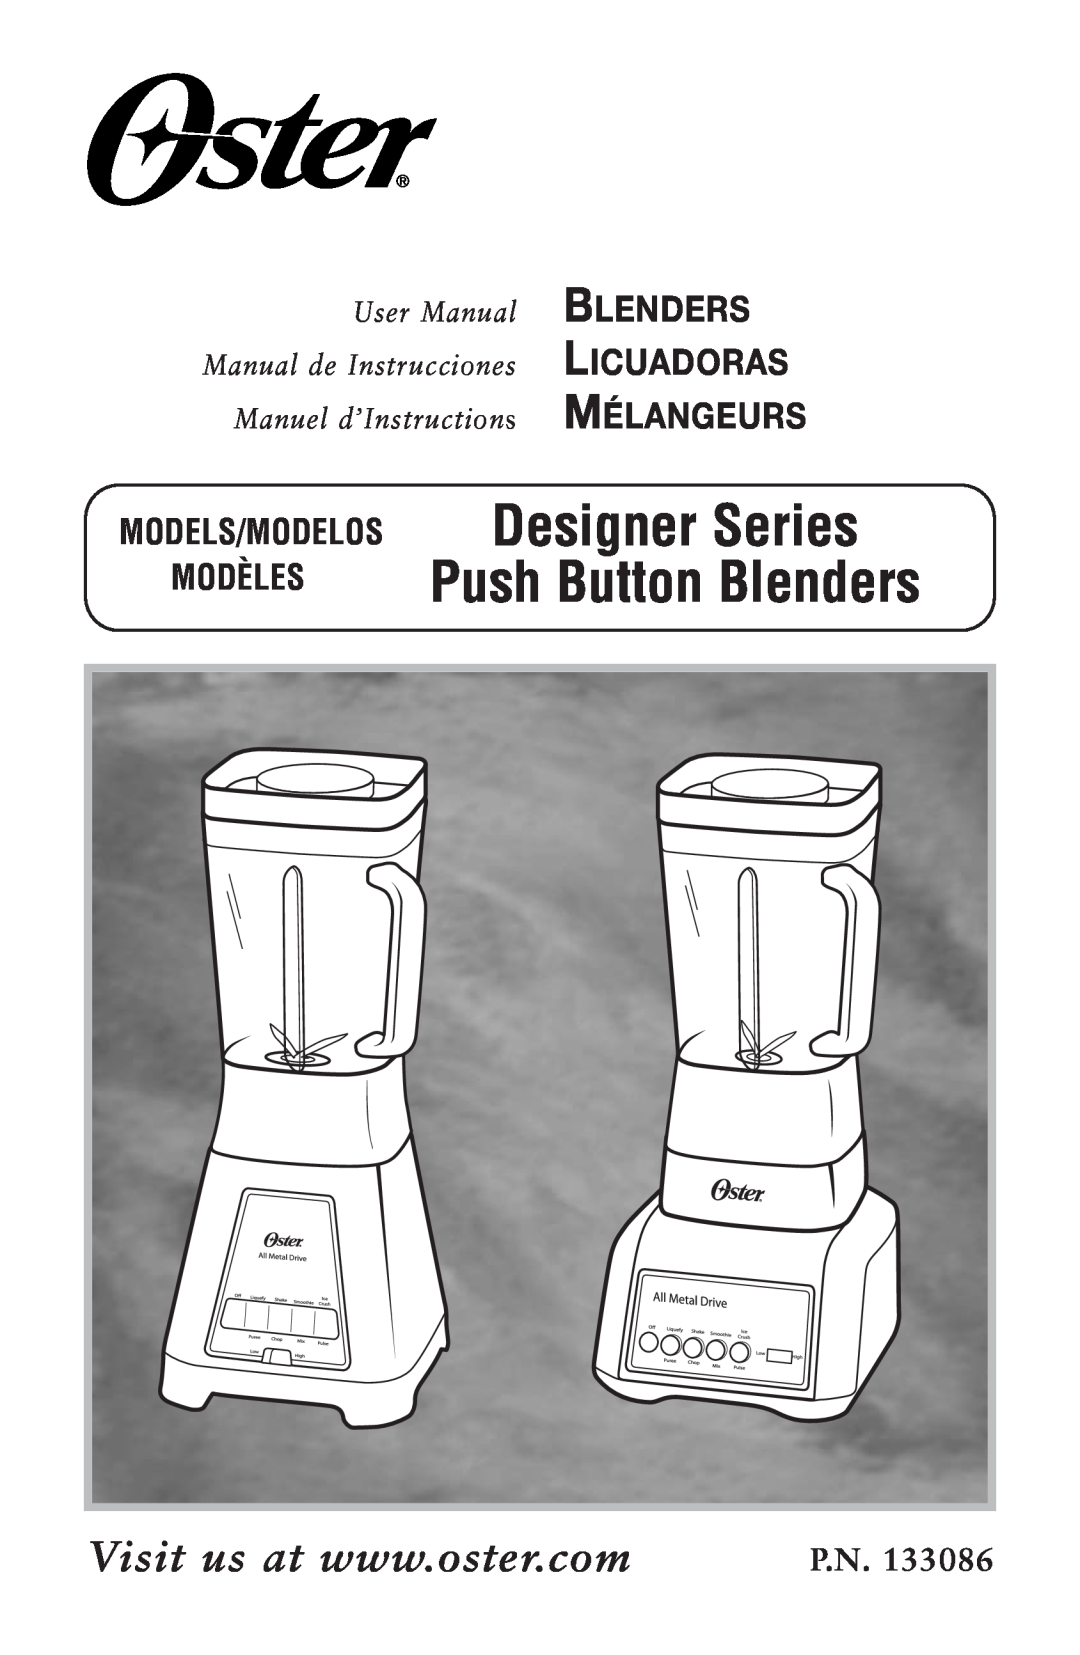 Oster Designer Series Push Button Blenders, 133086 user manual Blenders Licuadoras Mélangeurs, Modèles, Models/Modelos 